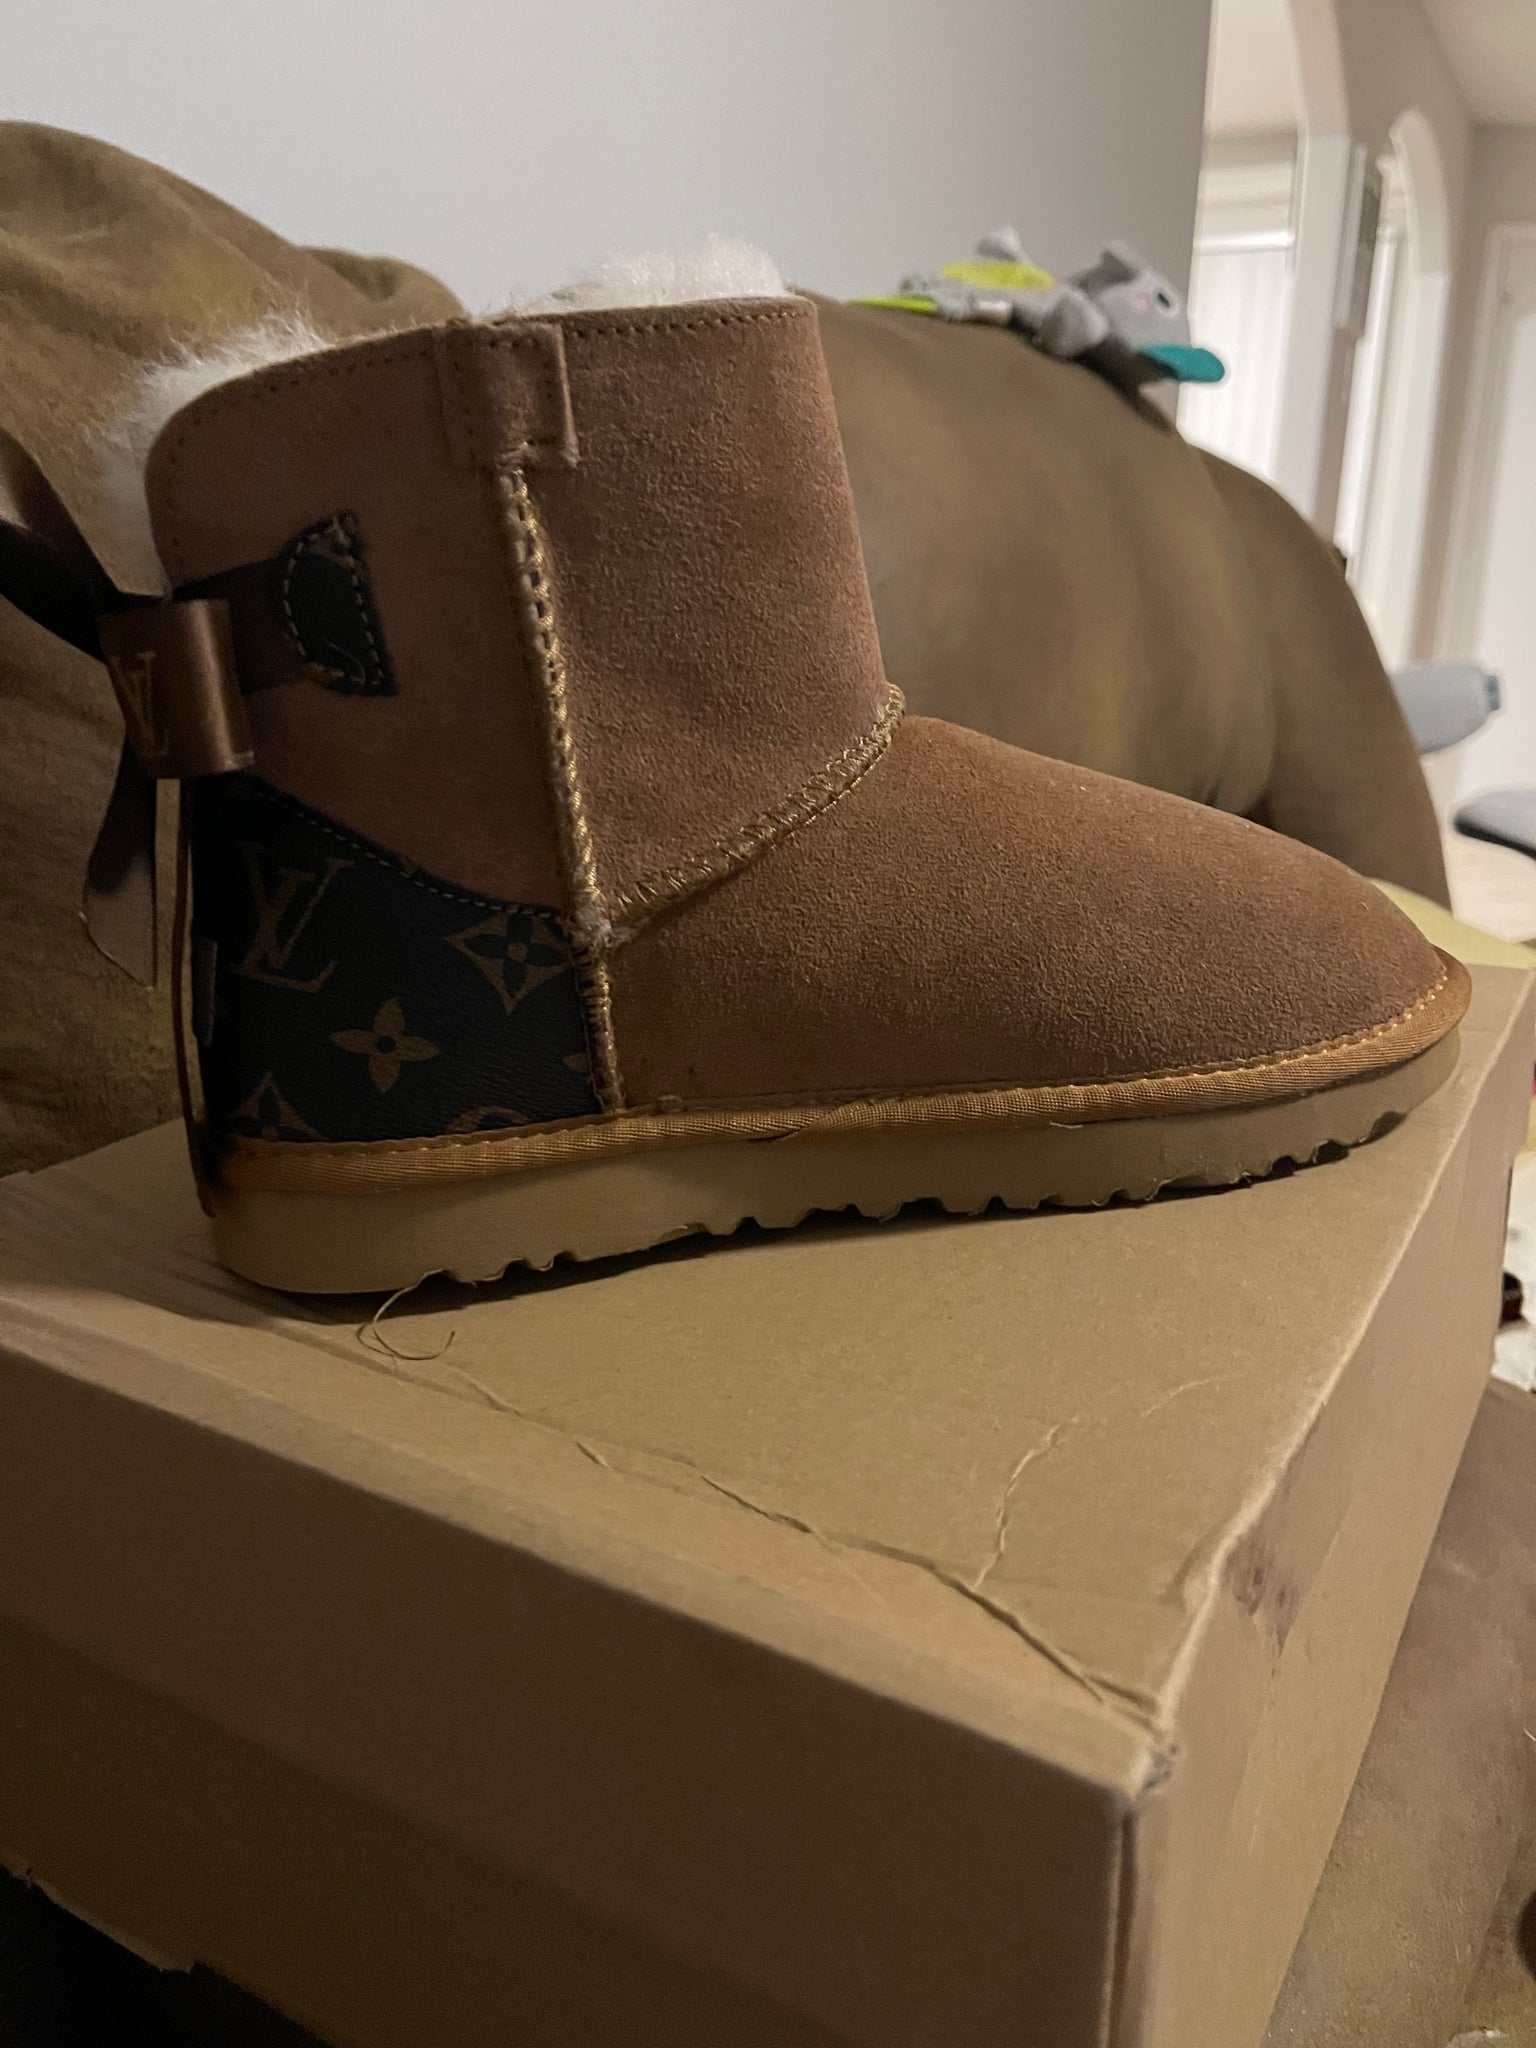 Brown LV UGG Boots - IR Fashion